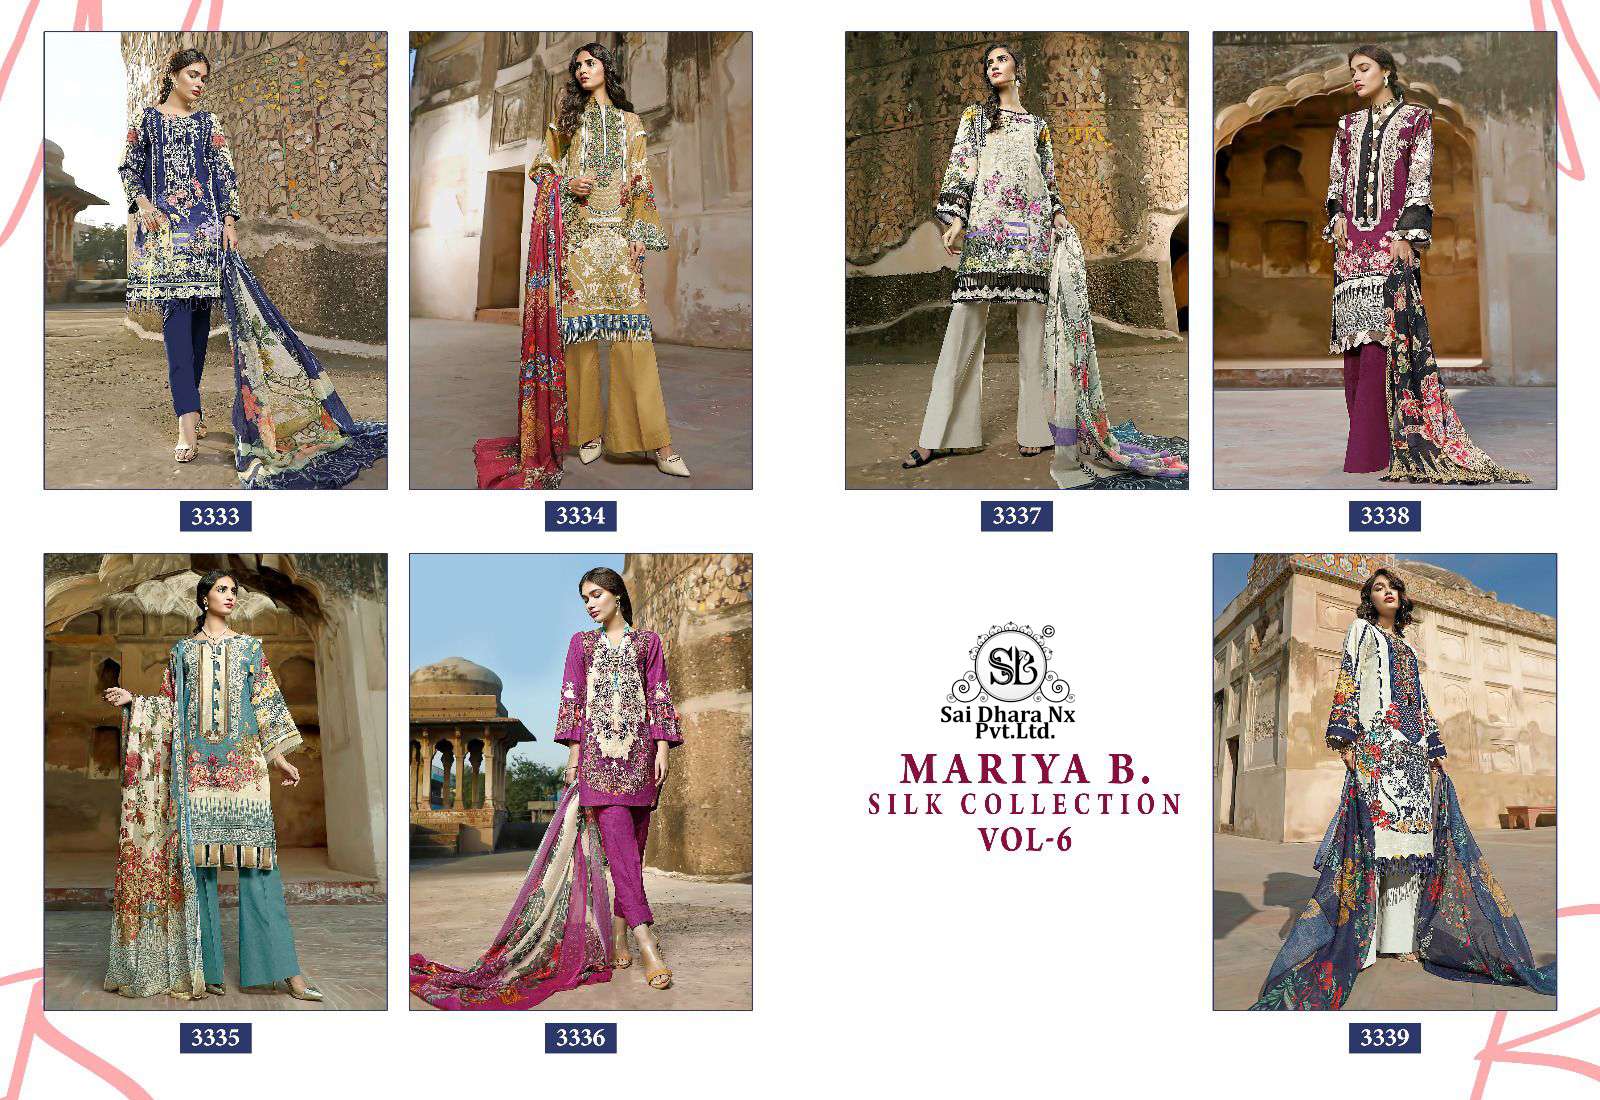 maria b latest silk collection  suit wholesale shop in surat - SaiDharaNx